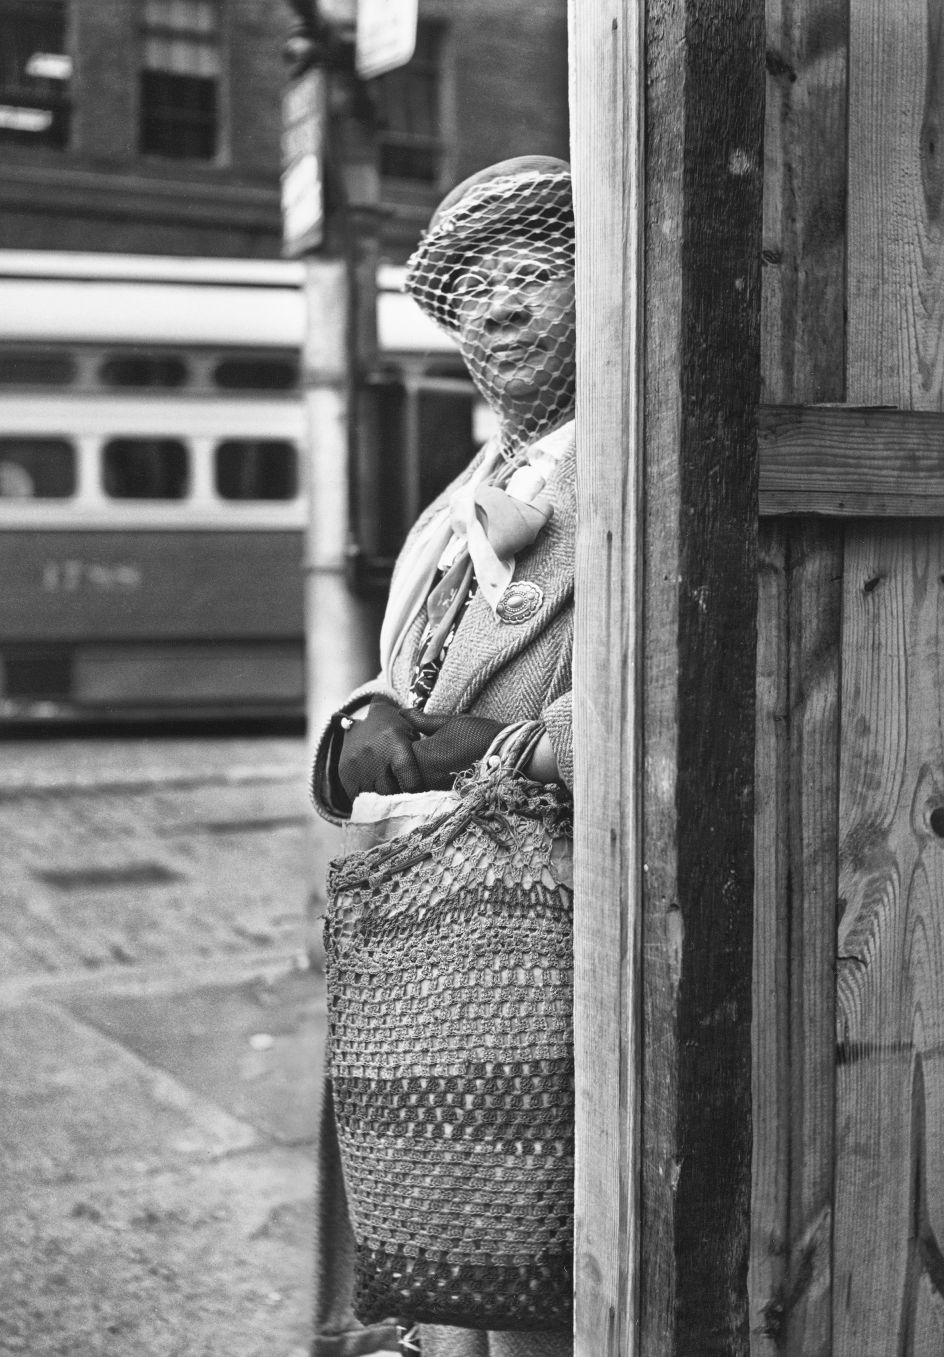 Untitled Pittsburgh 1950 © Elliott Erwitt / Magnum Photos Courtesy: Carnegie Library of Pittsburgh